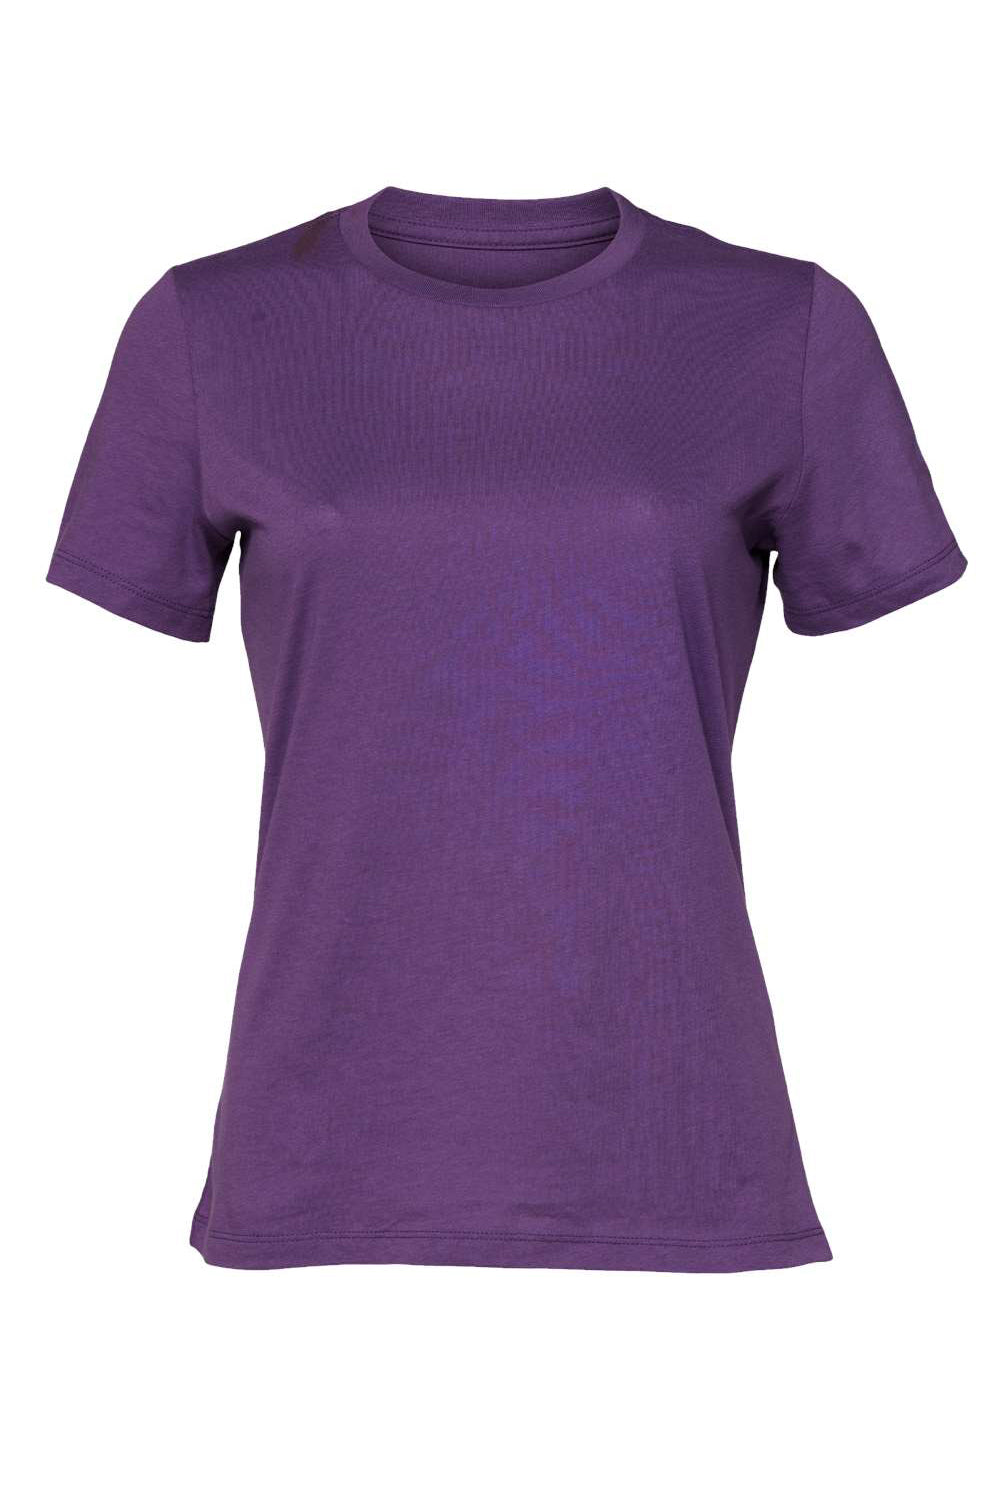 Bella + Canvas BC6400/B6400/6400 Womens Relaxed Jersey Short Sleeve Crewneck T-Shirt Royal Purple Flat Front